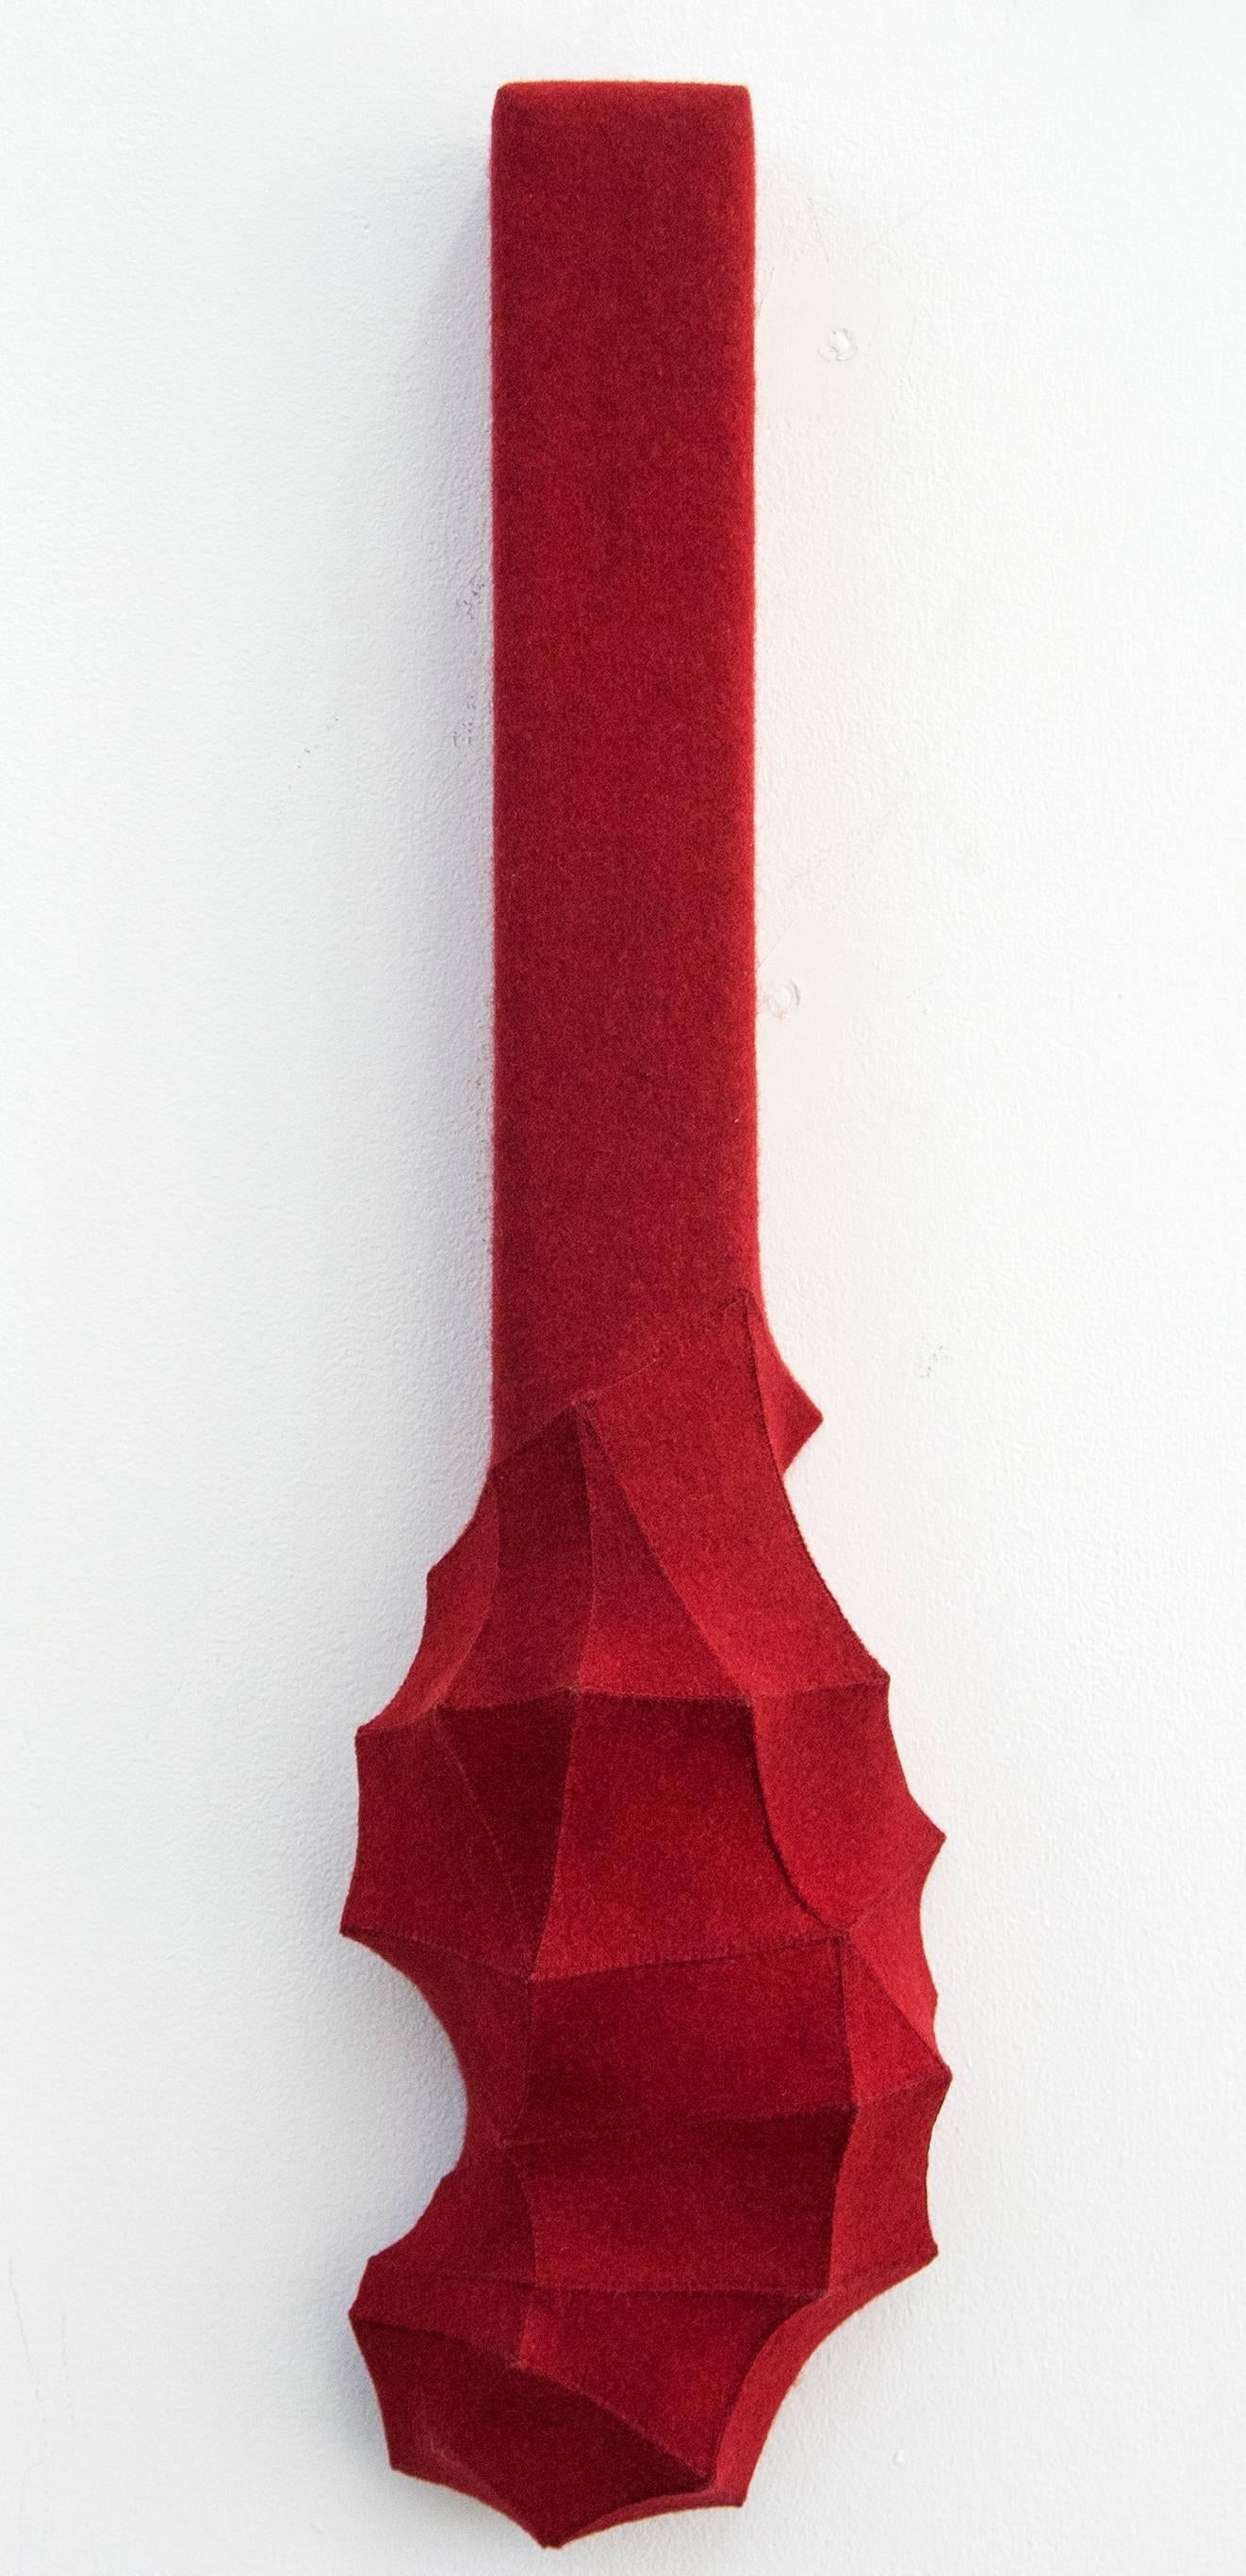 Faction - small, red, geometrical, 3D, felt, fabric, biomorphic, wall art - Sculpture by Chung-Im Kim